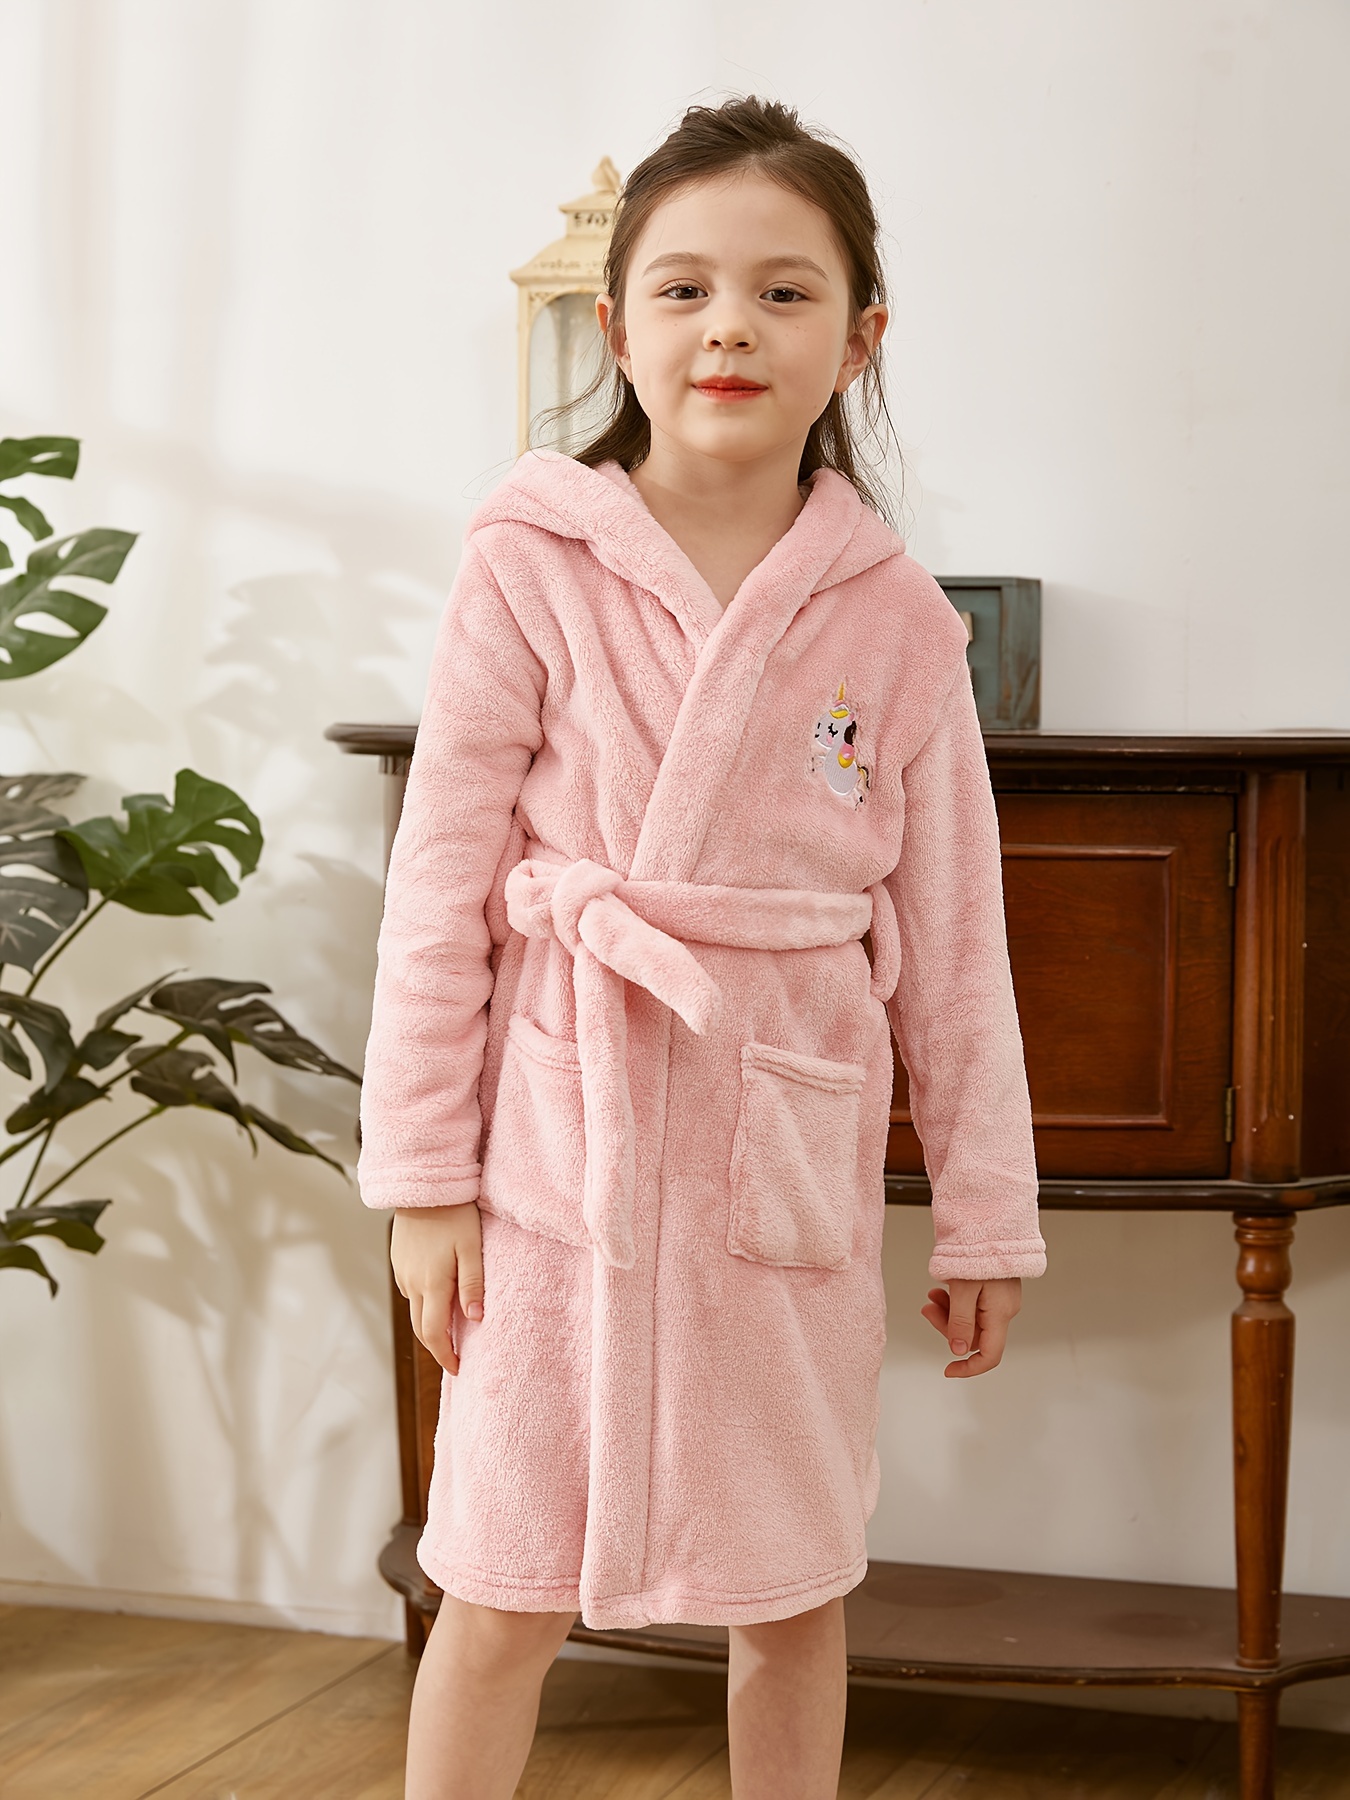 Baby Girls Robe Pink Hooded Dressing Gown Cute Soft Fleece Nightwear Bath  Robes